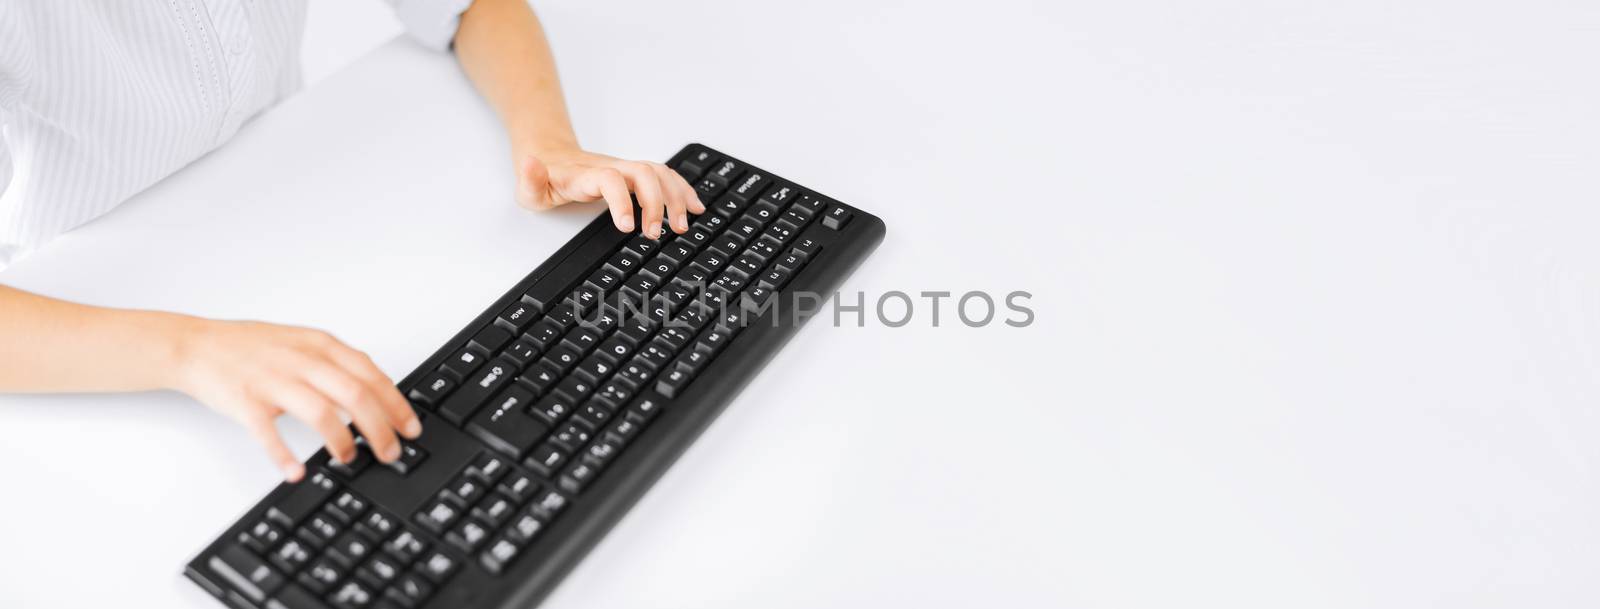 student girls hands typing on keyboard by dolgachov